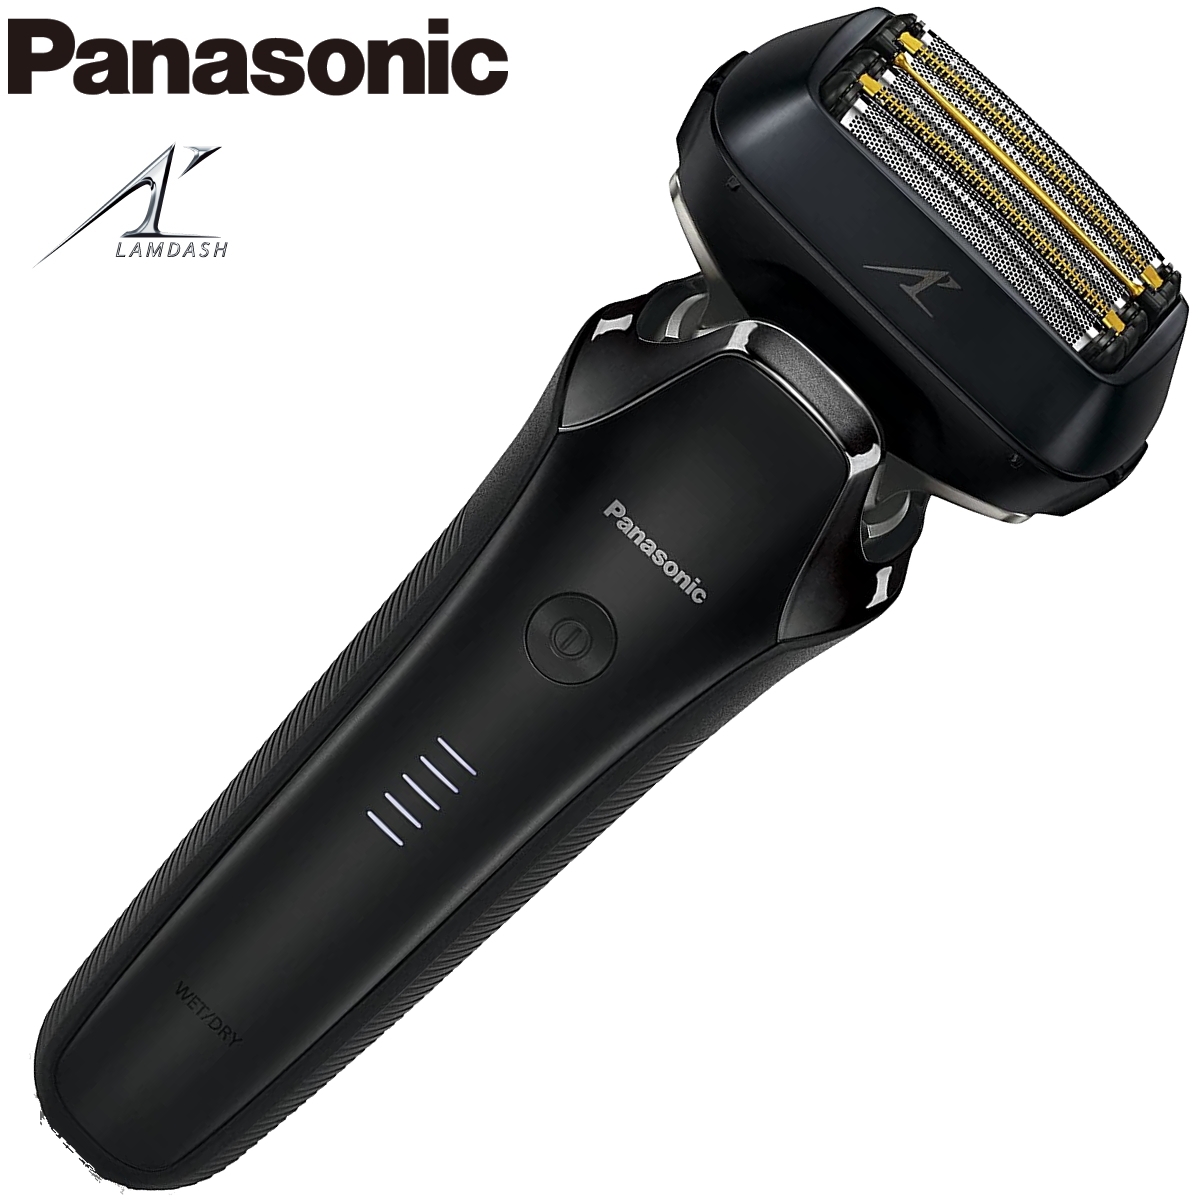 Panasonic ES-LS5B-K BLACK